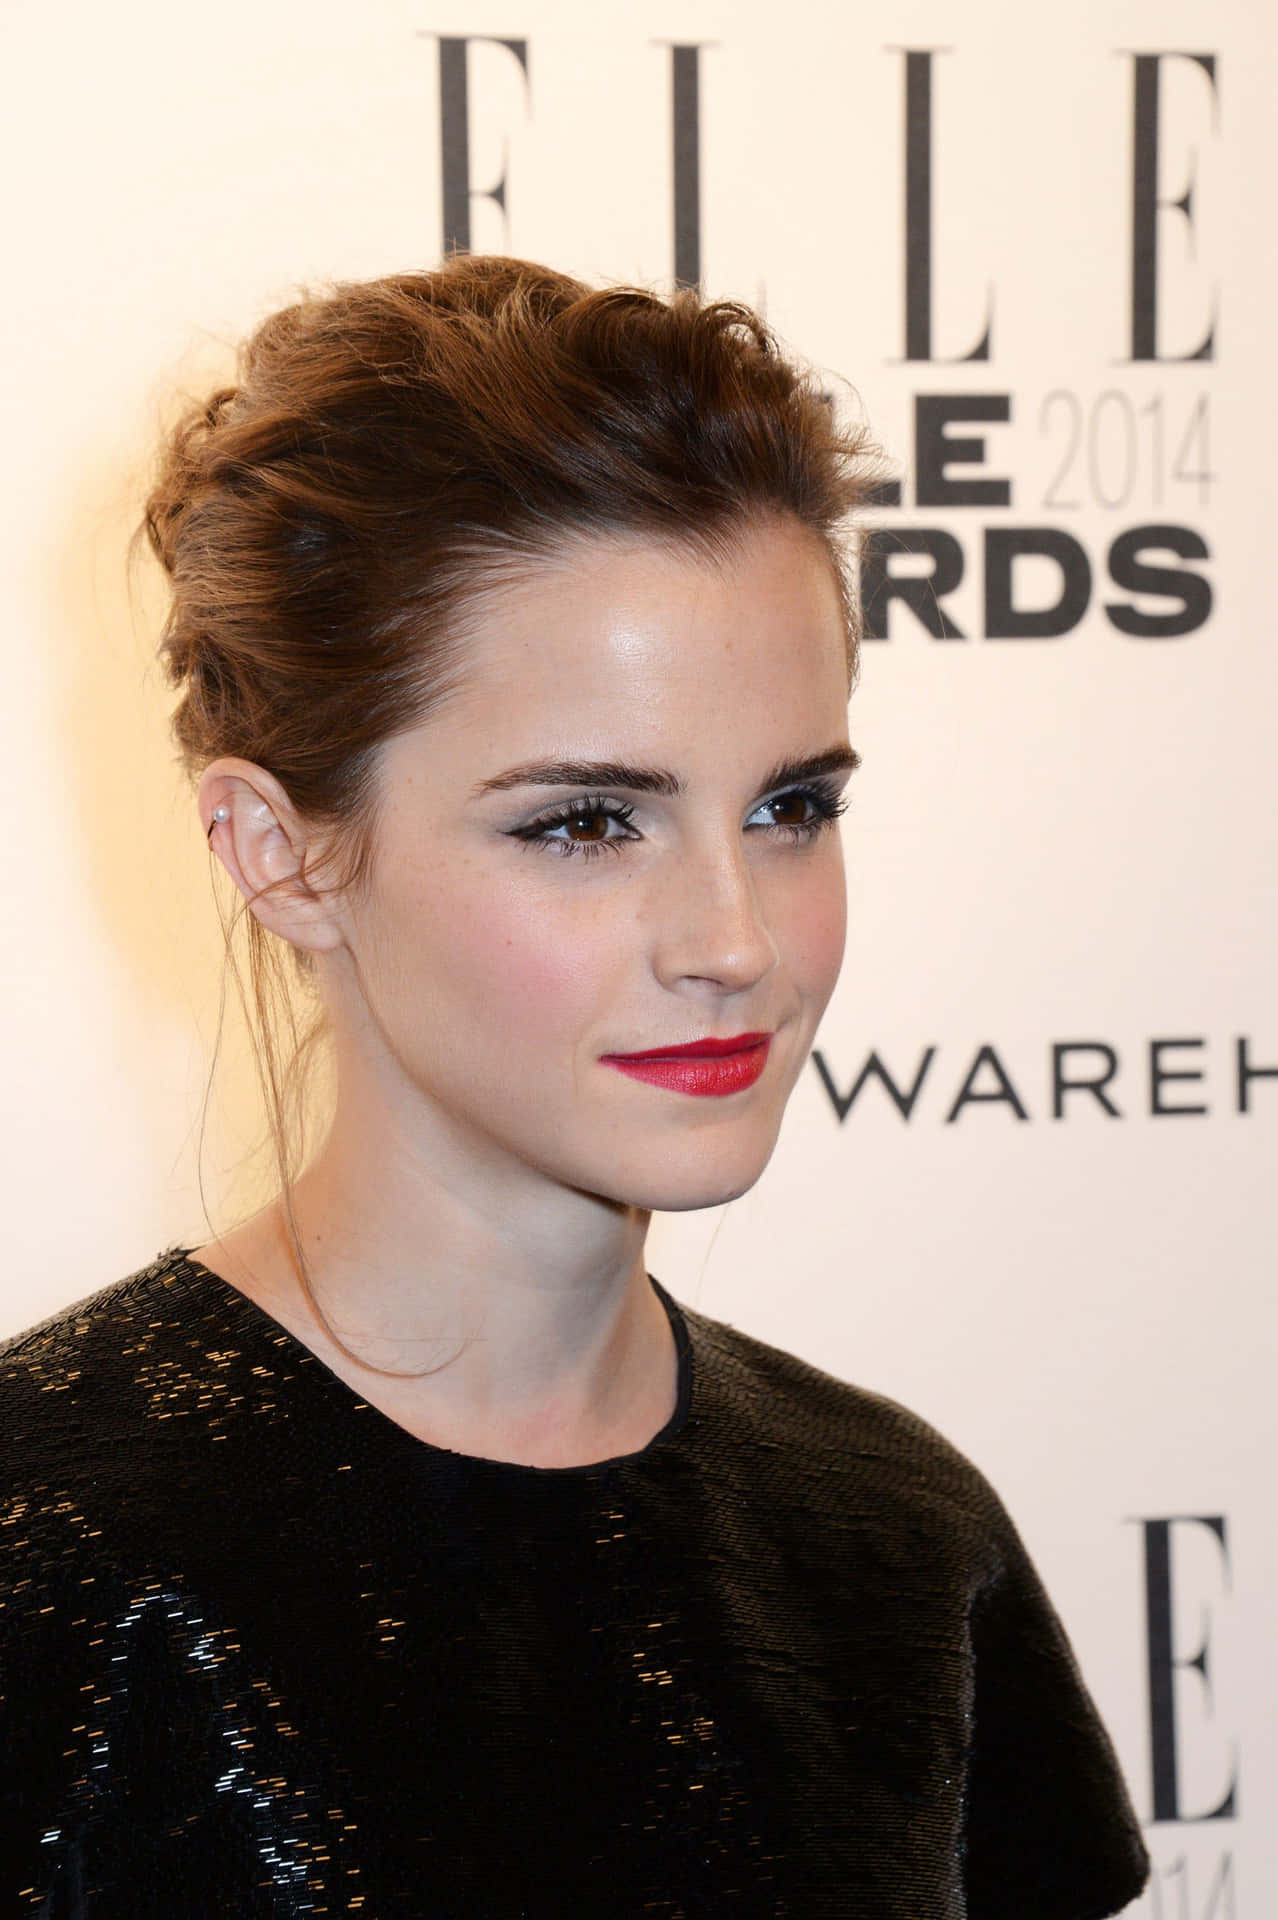 Emma Watson striking a pose during a glamorous photoshoot